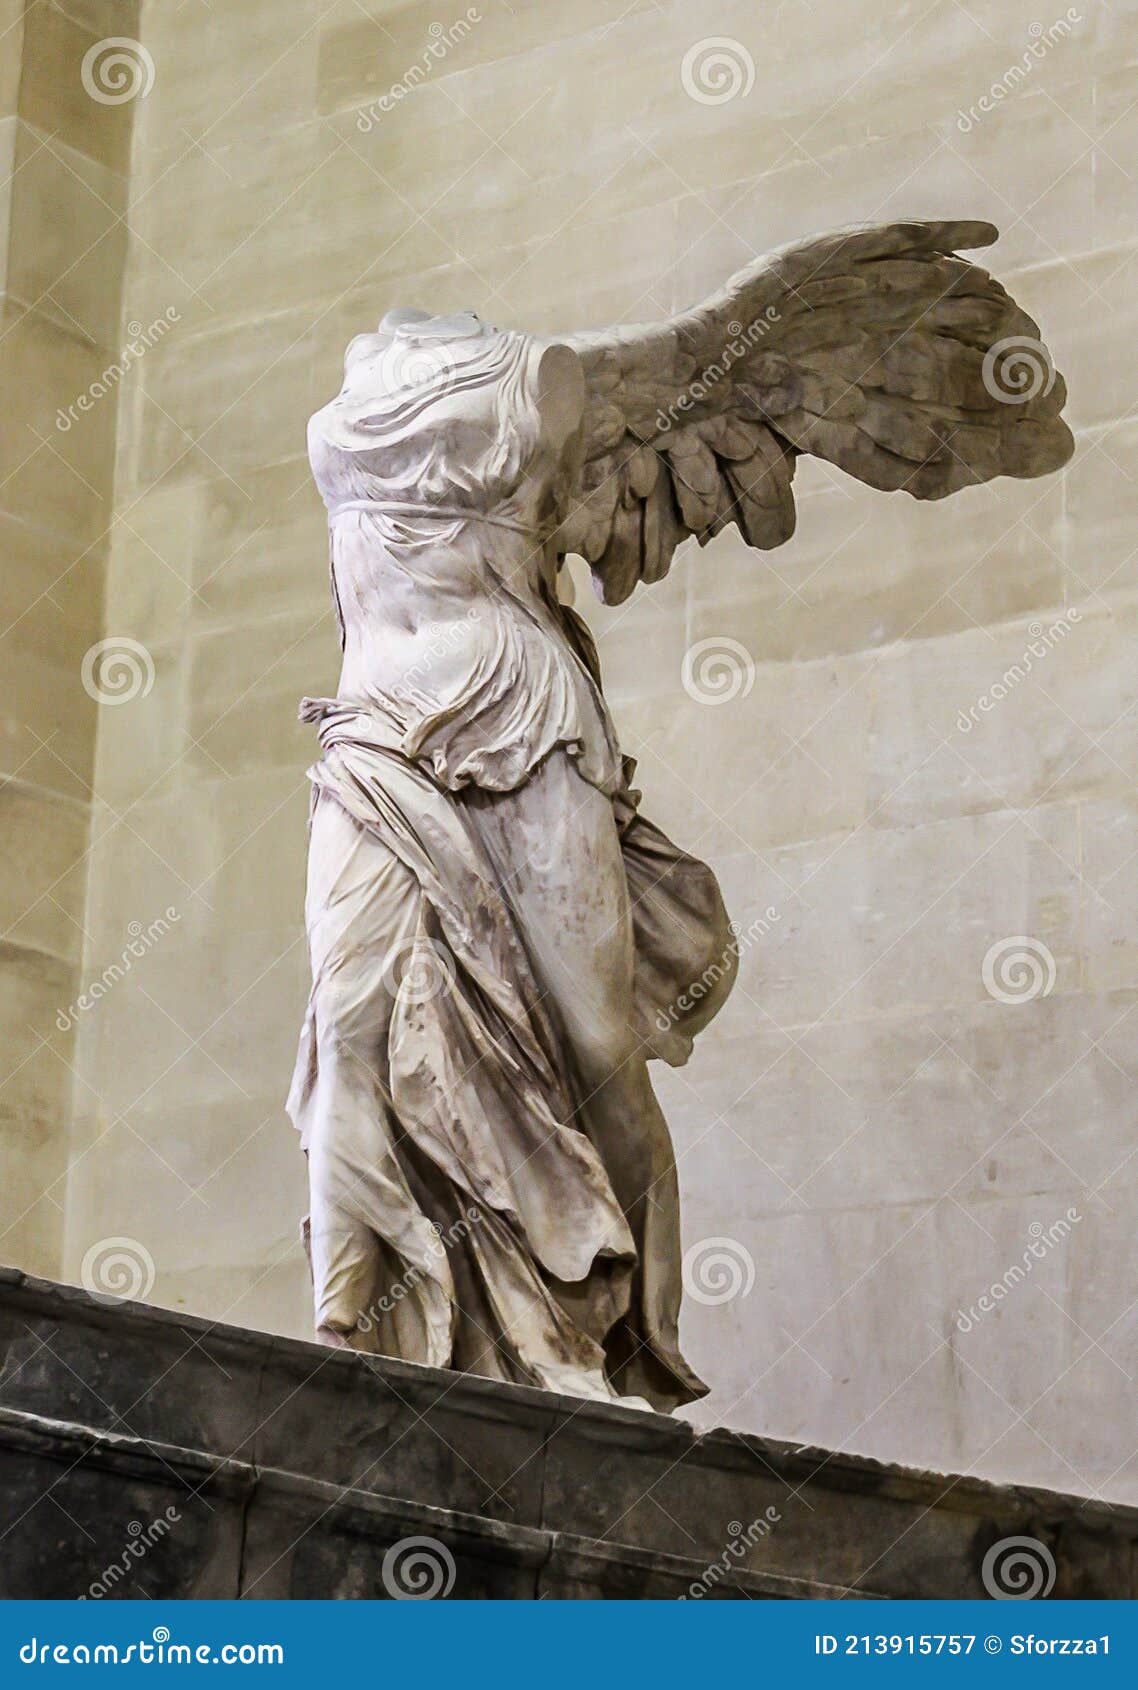 The Winged of Samothrace, Also Called the Nike of Samothrace. Louvre, France Editorial Photography - Image of nike, samothrace: 213915757